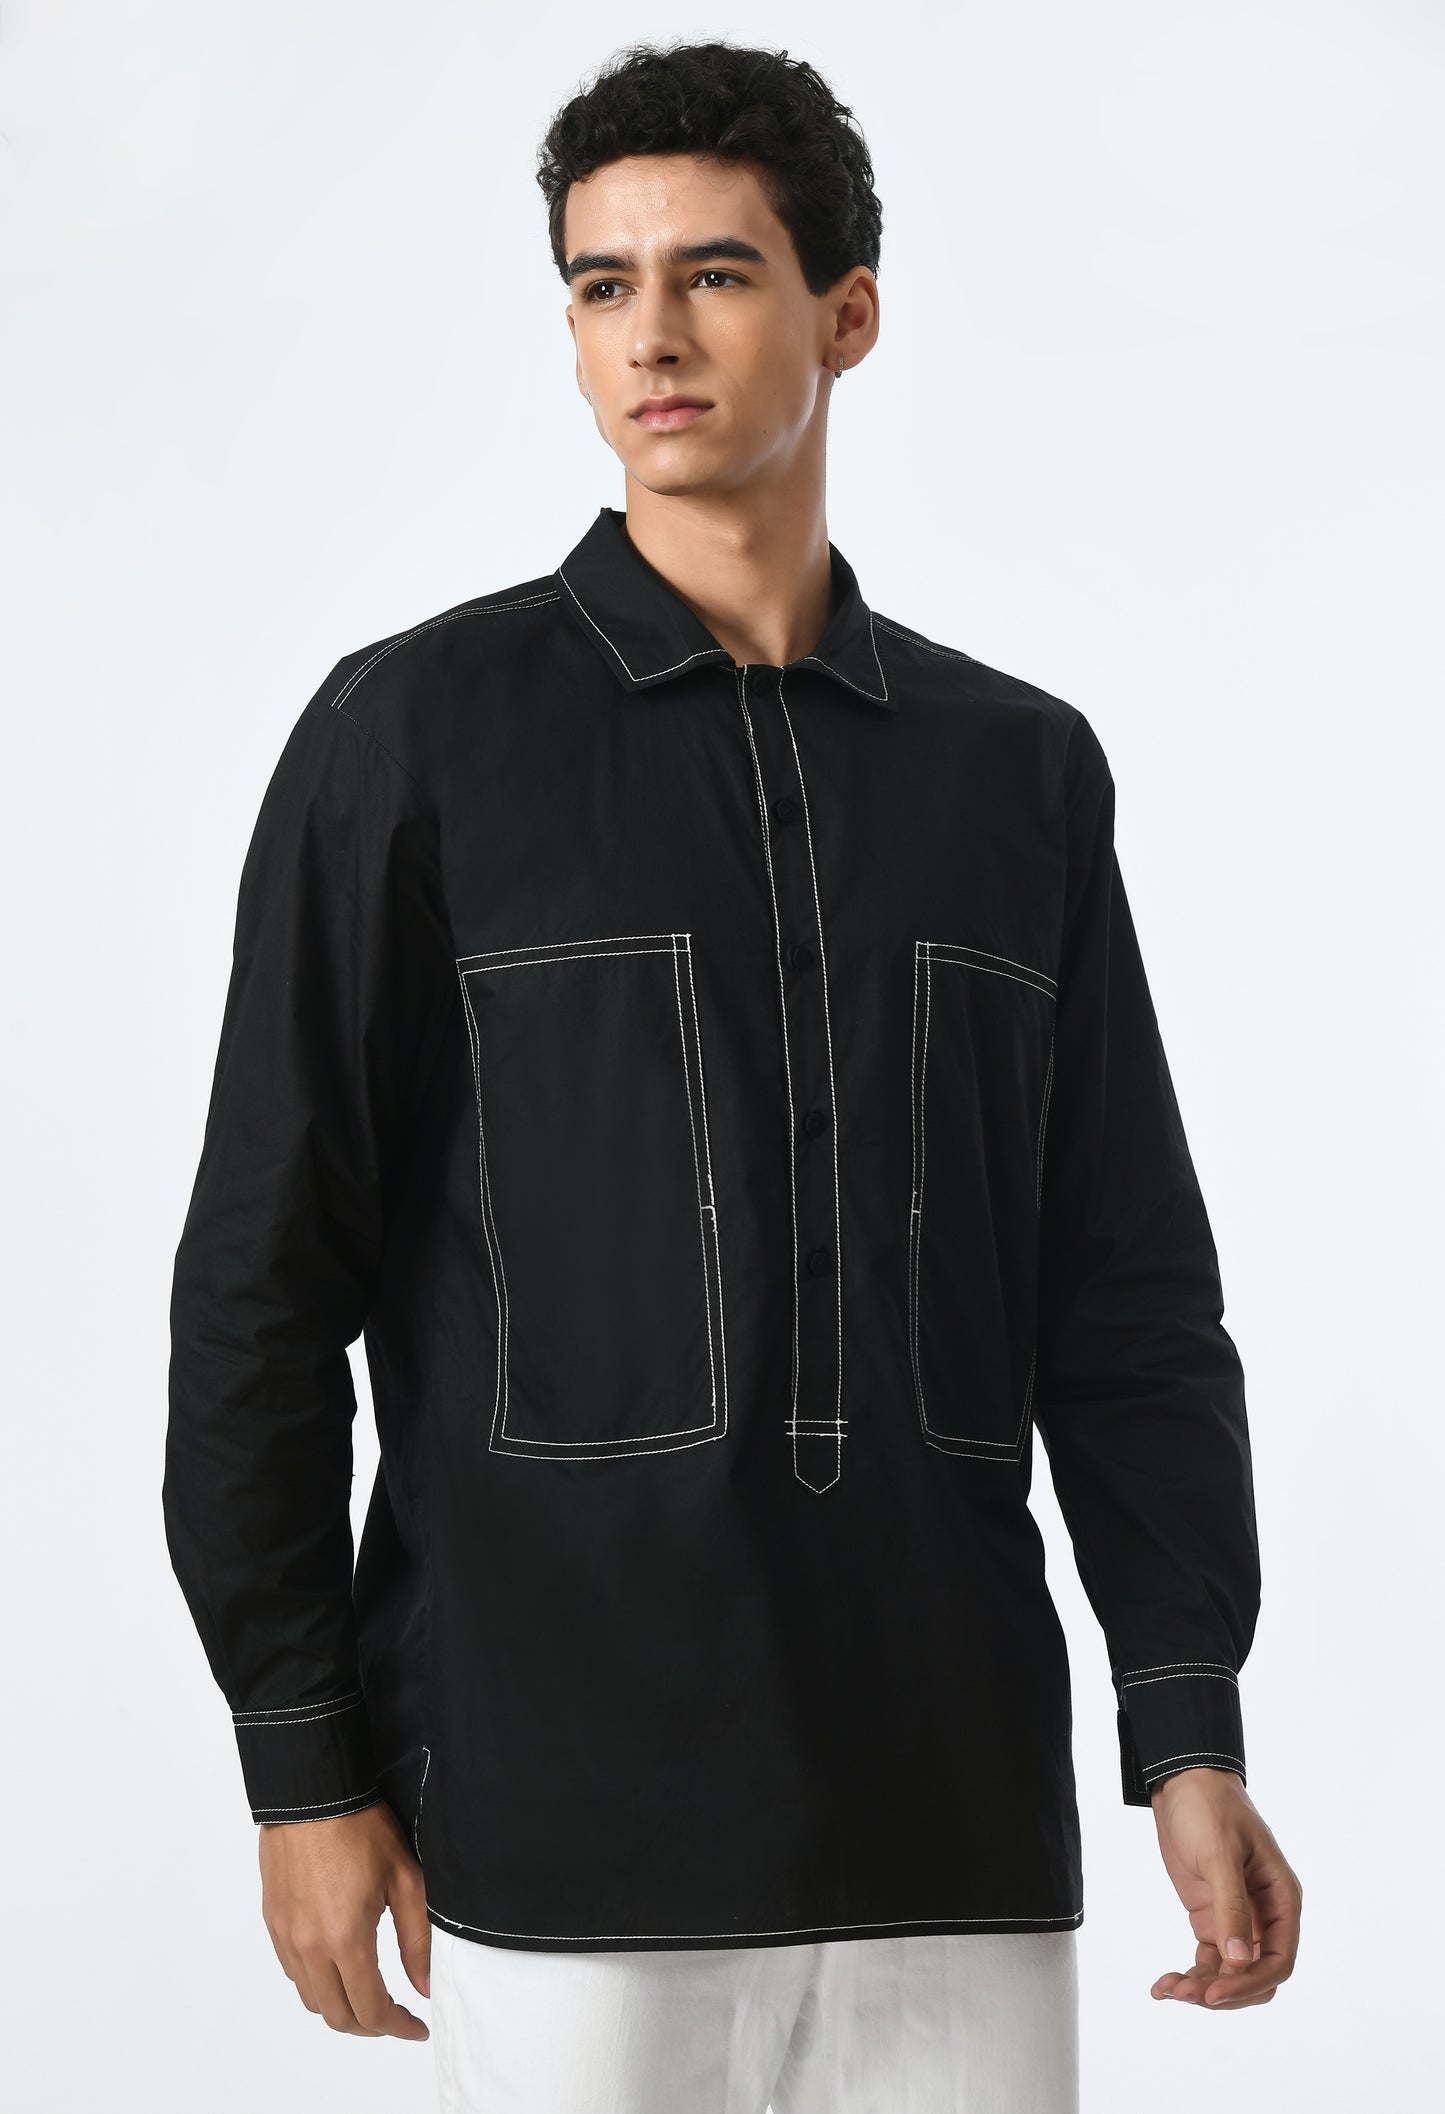 Unisex black shirt with classic collar.